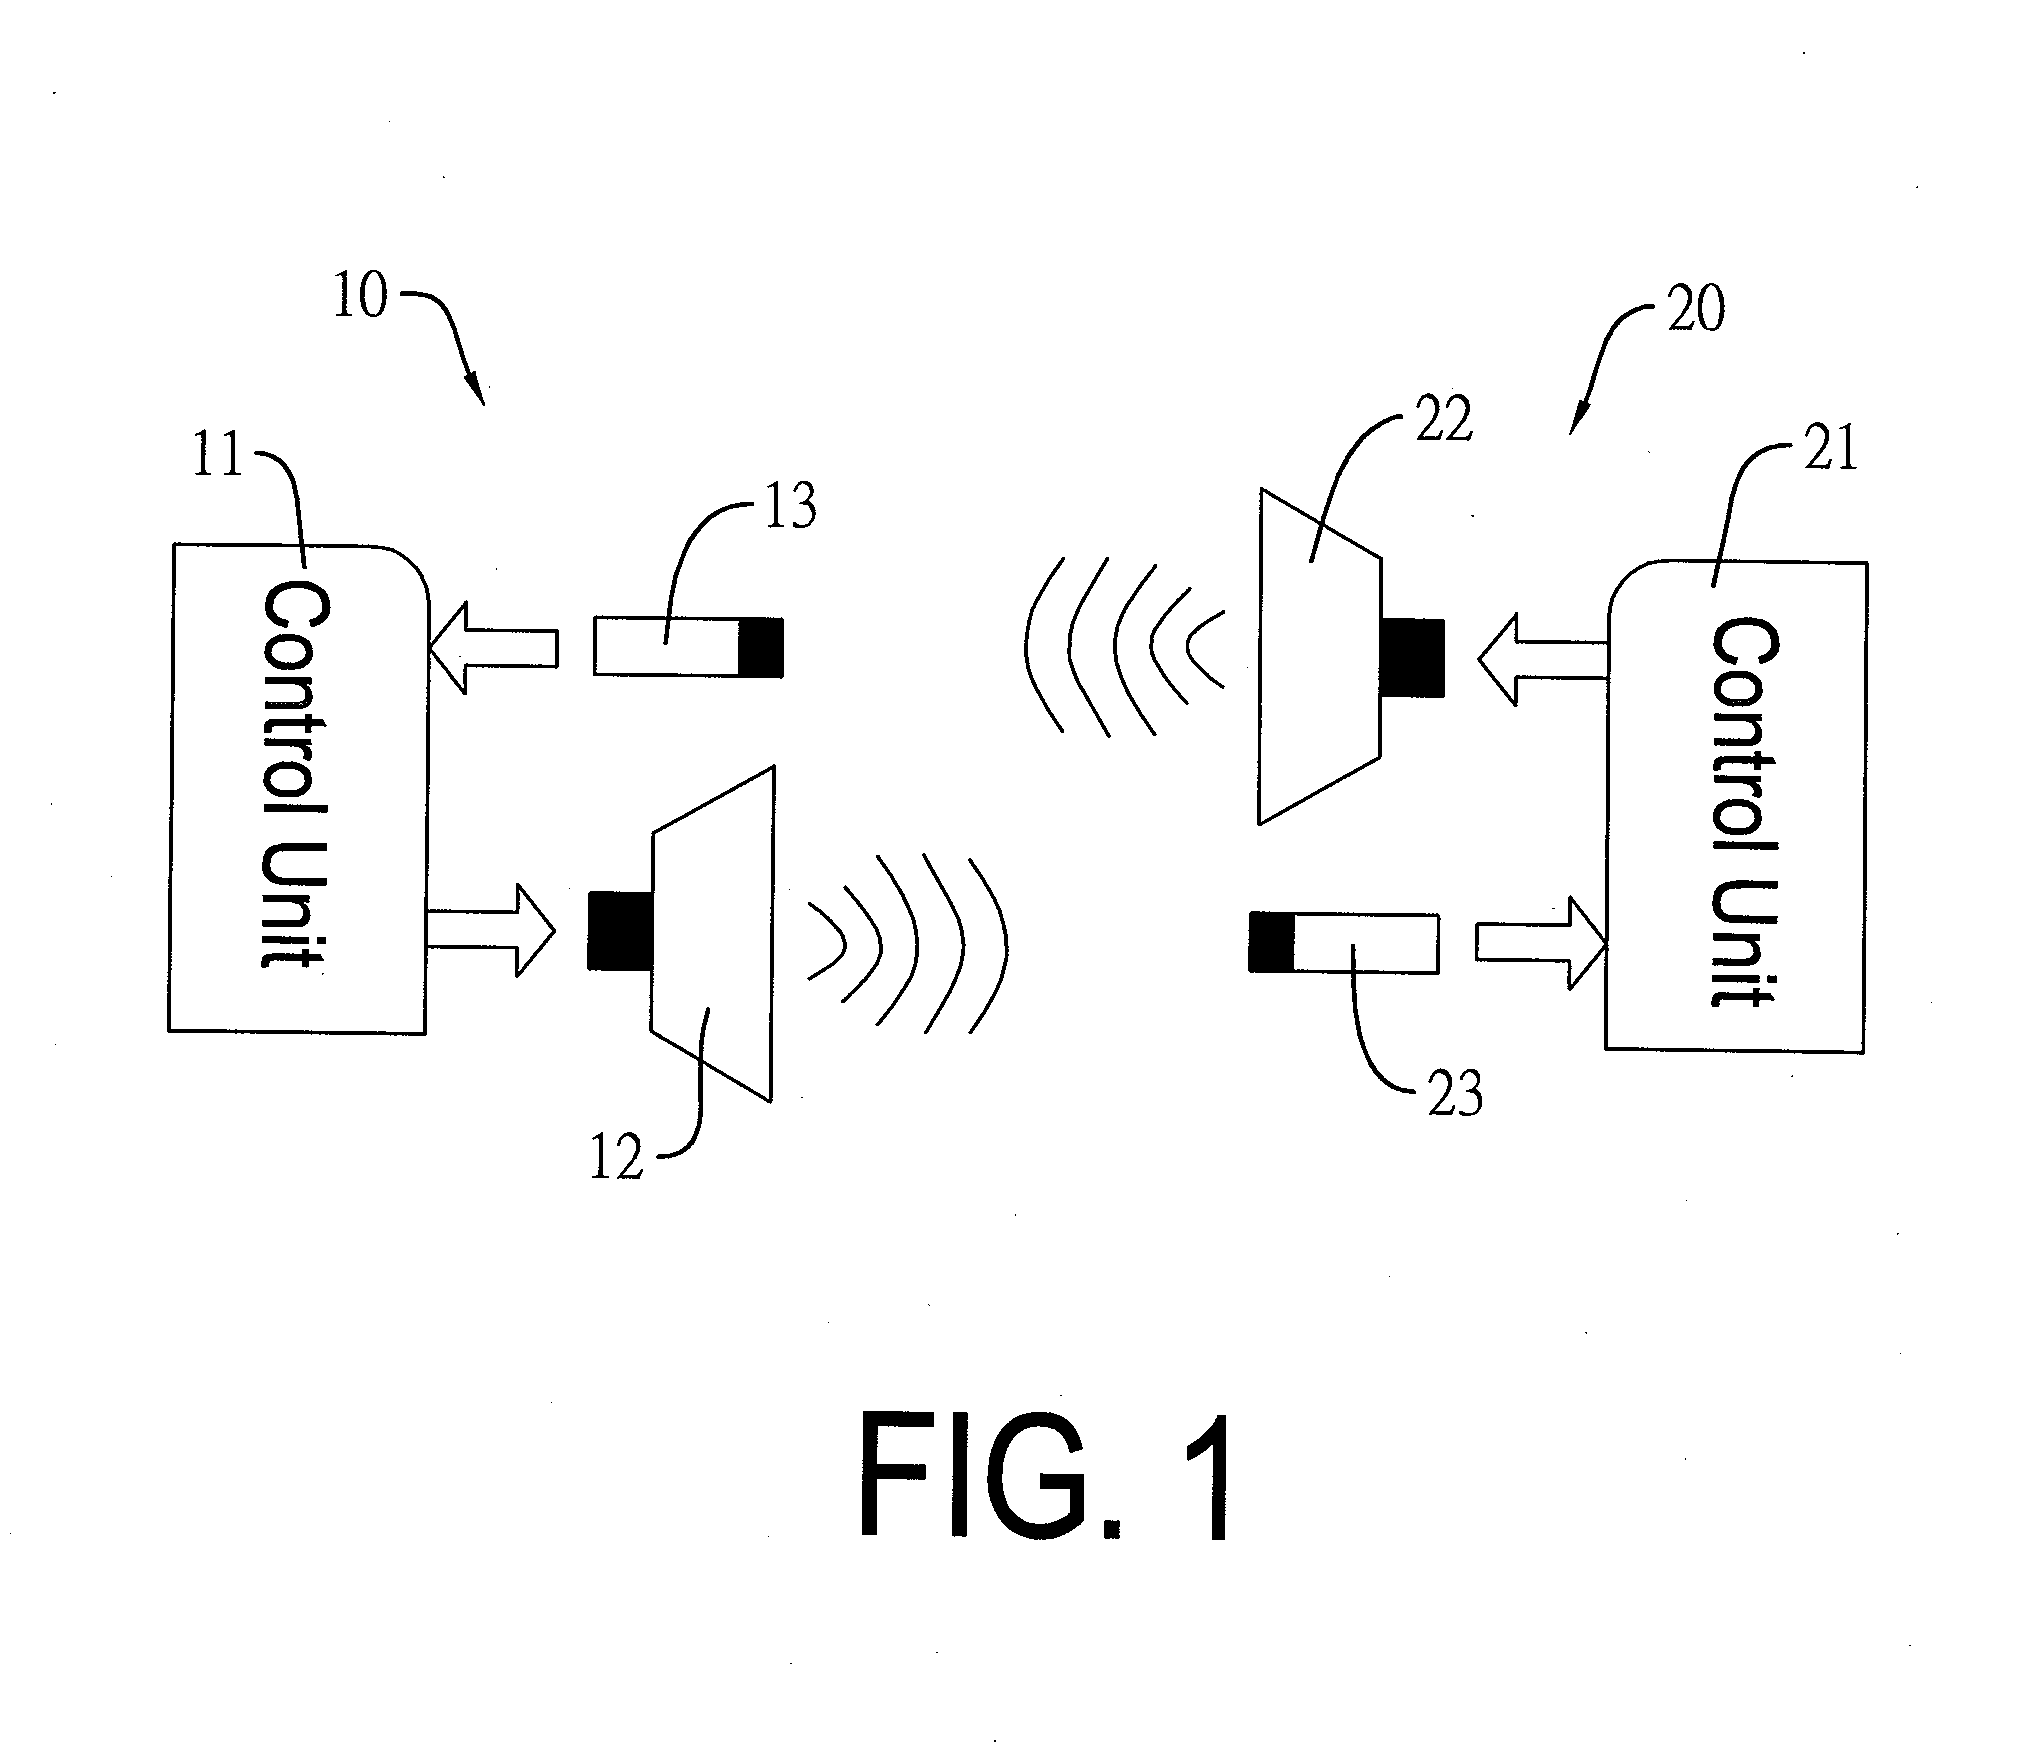 Control Method of Establishing Wireless Network Connection Through Modulation Tone